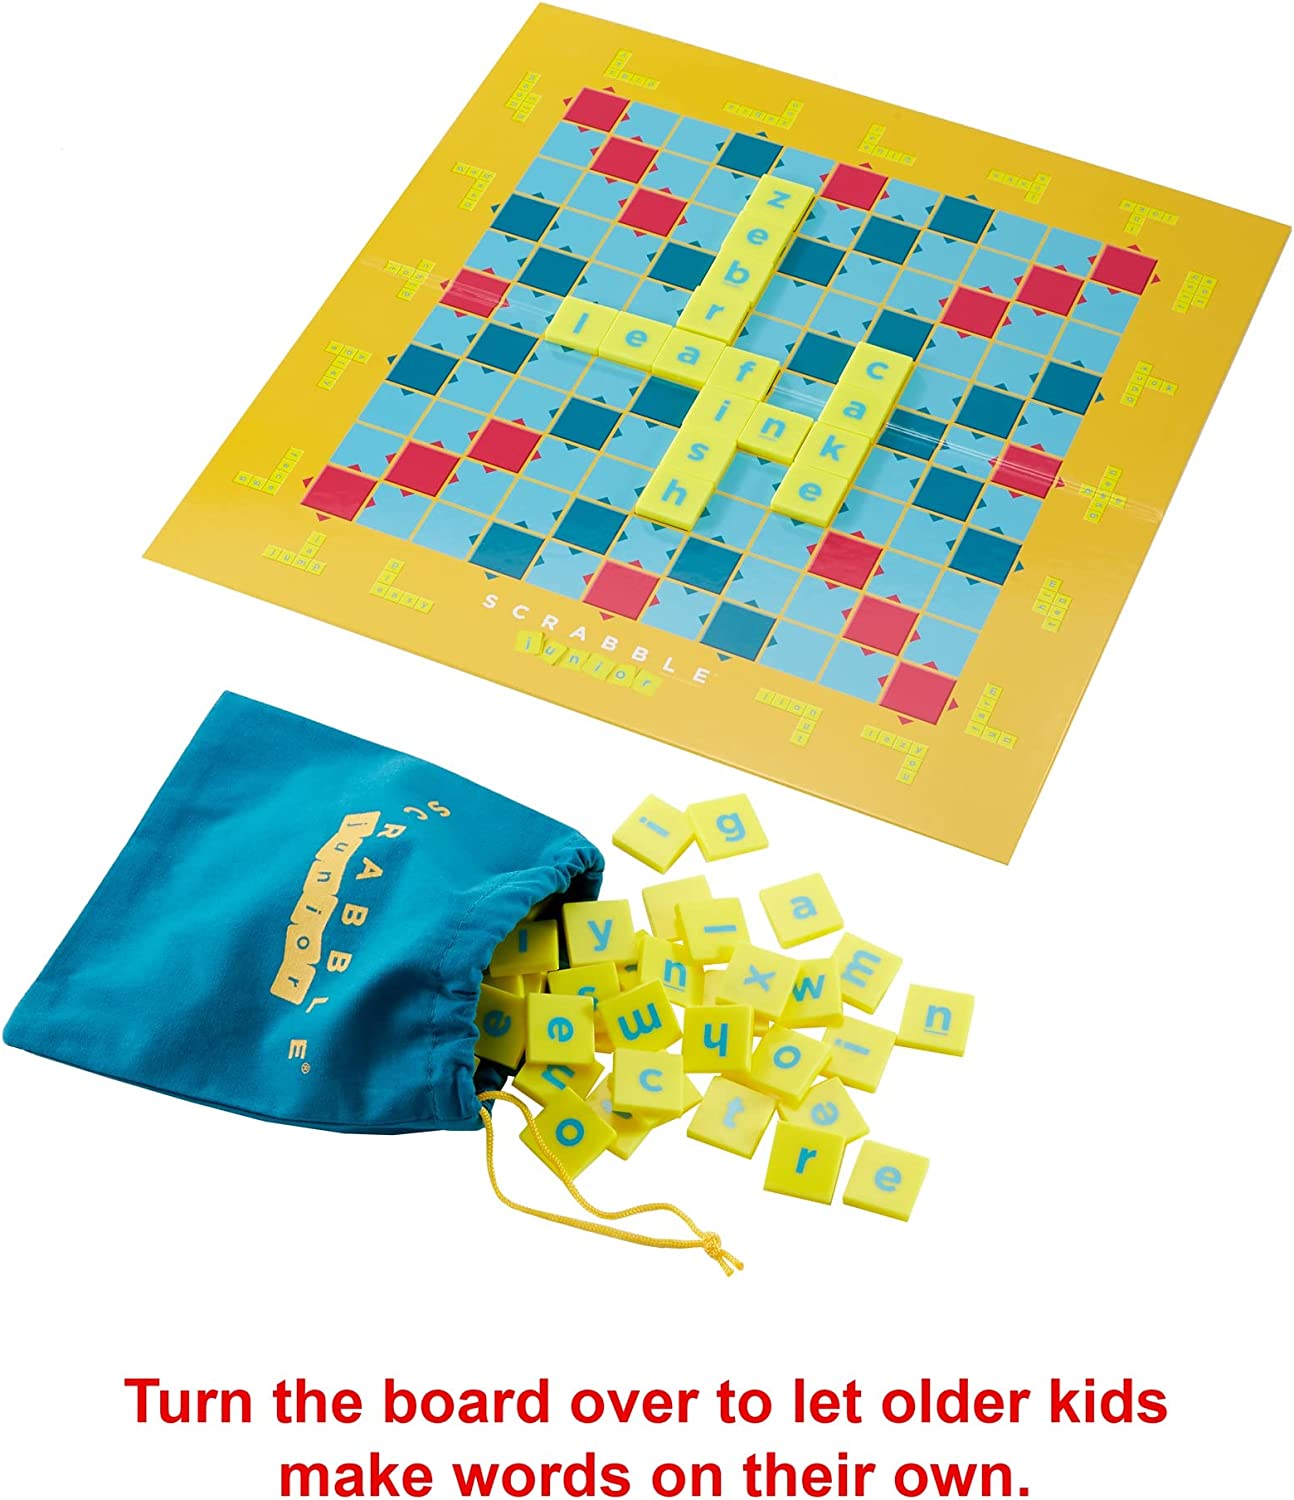 Scrabble Junior / Mattel